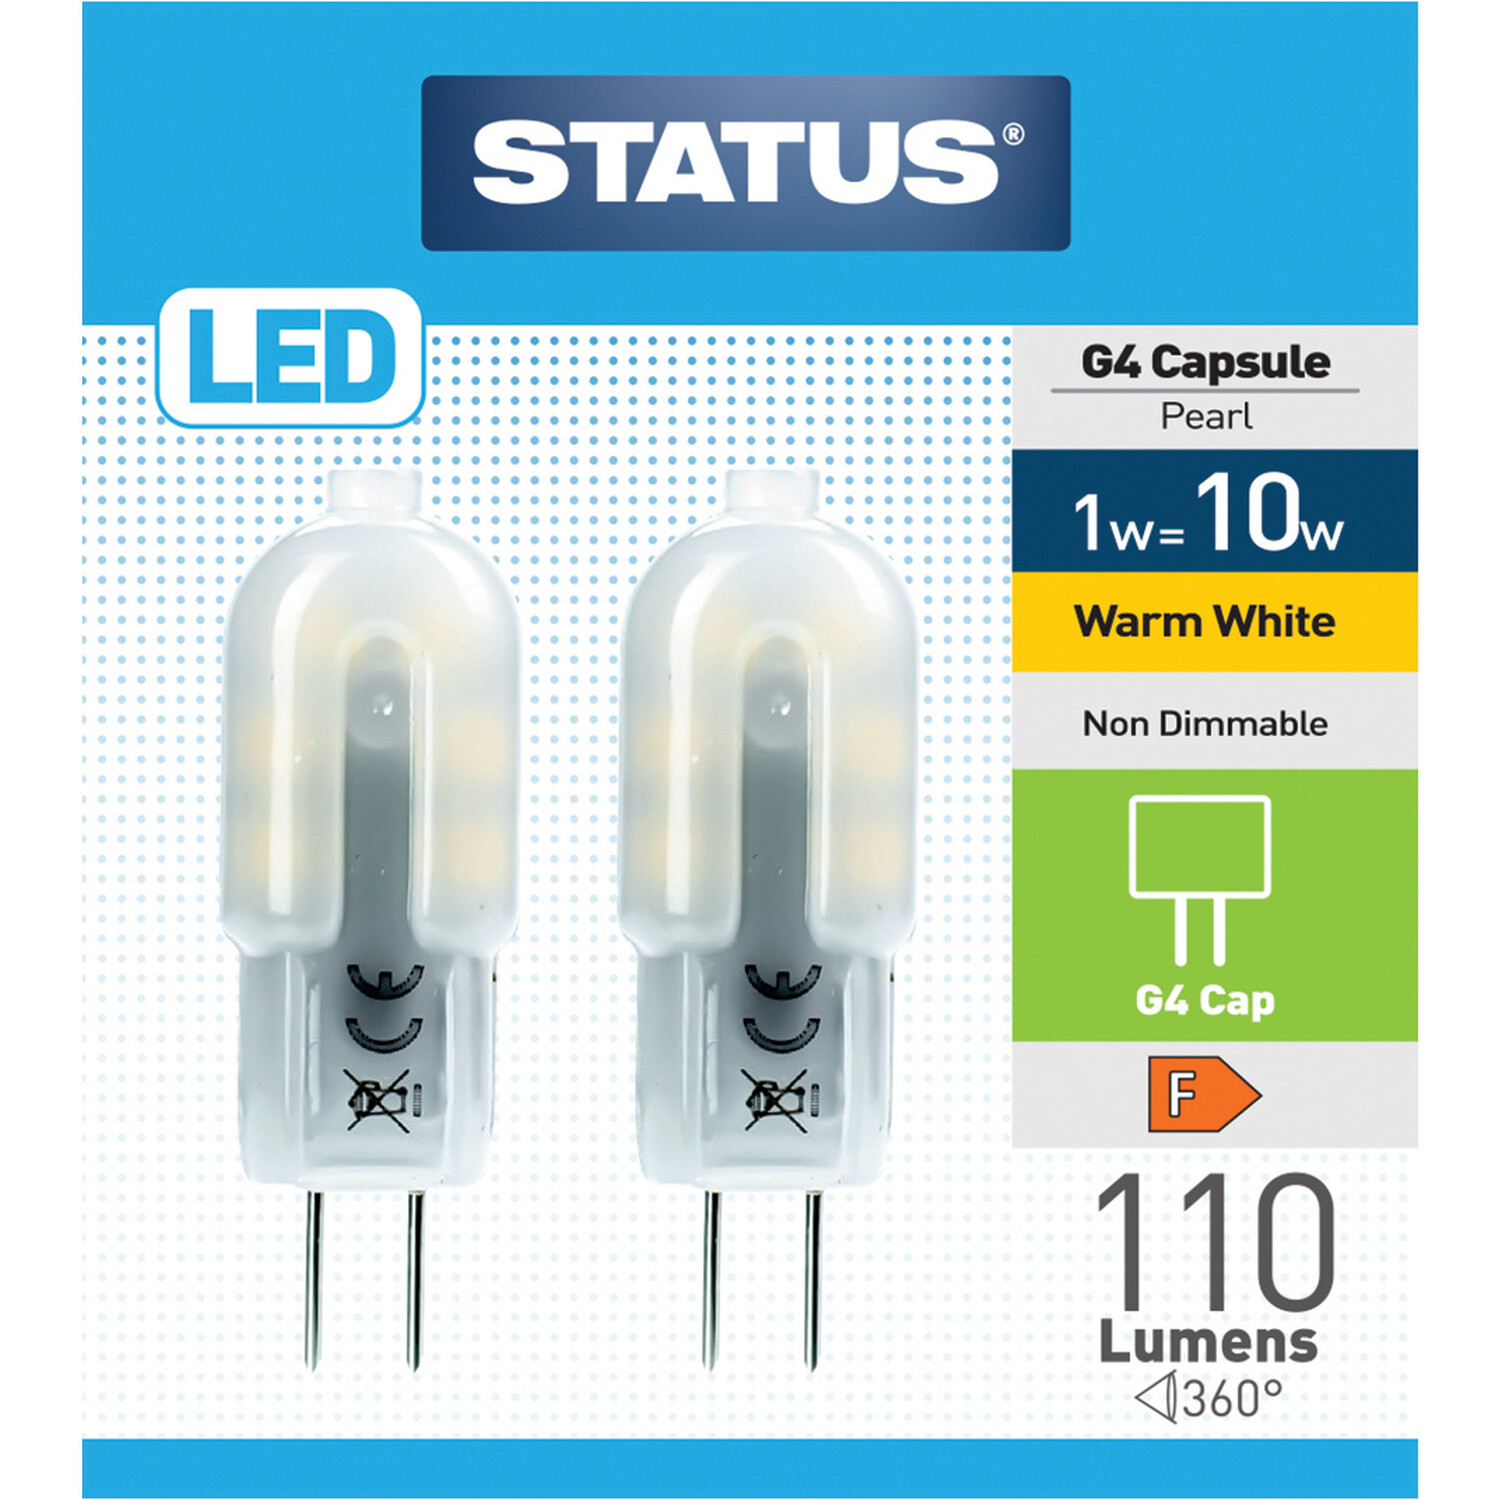 Pack of 2 Status LED G4 Capsule Pearl Lightbulbs Image 1